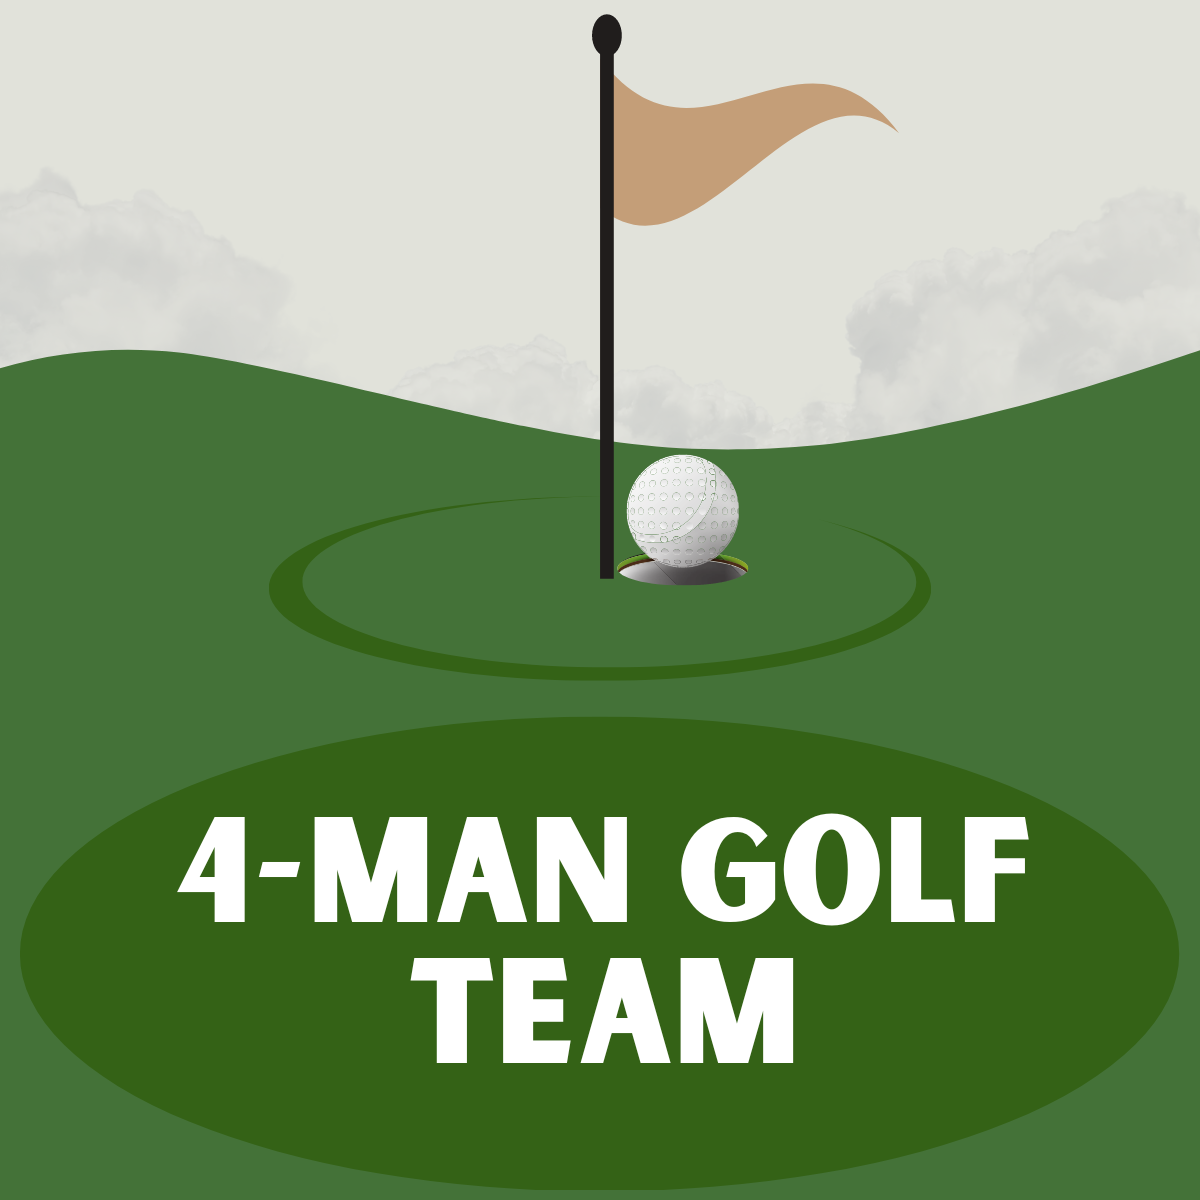 4-Man Golf Team - New Mexico Open